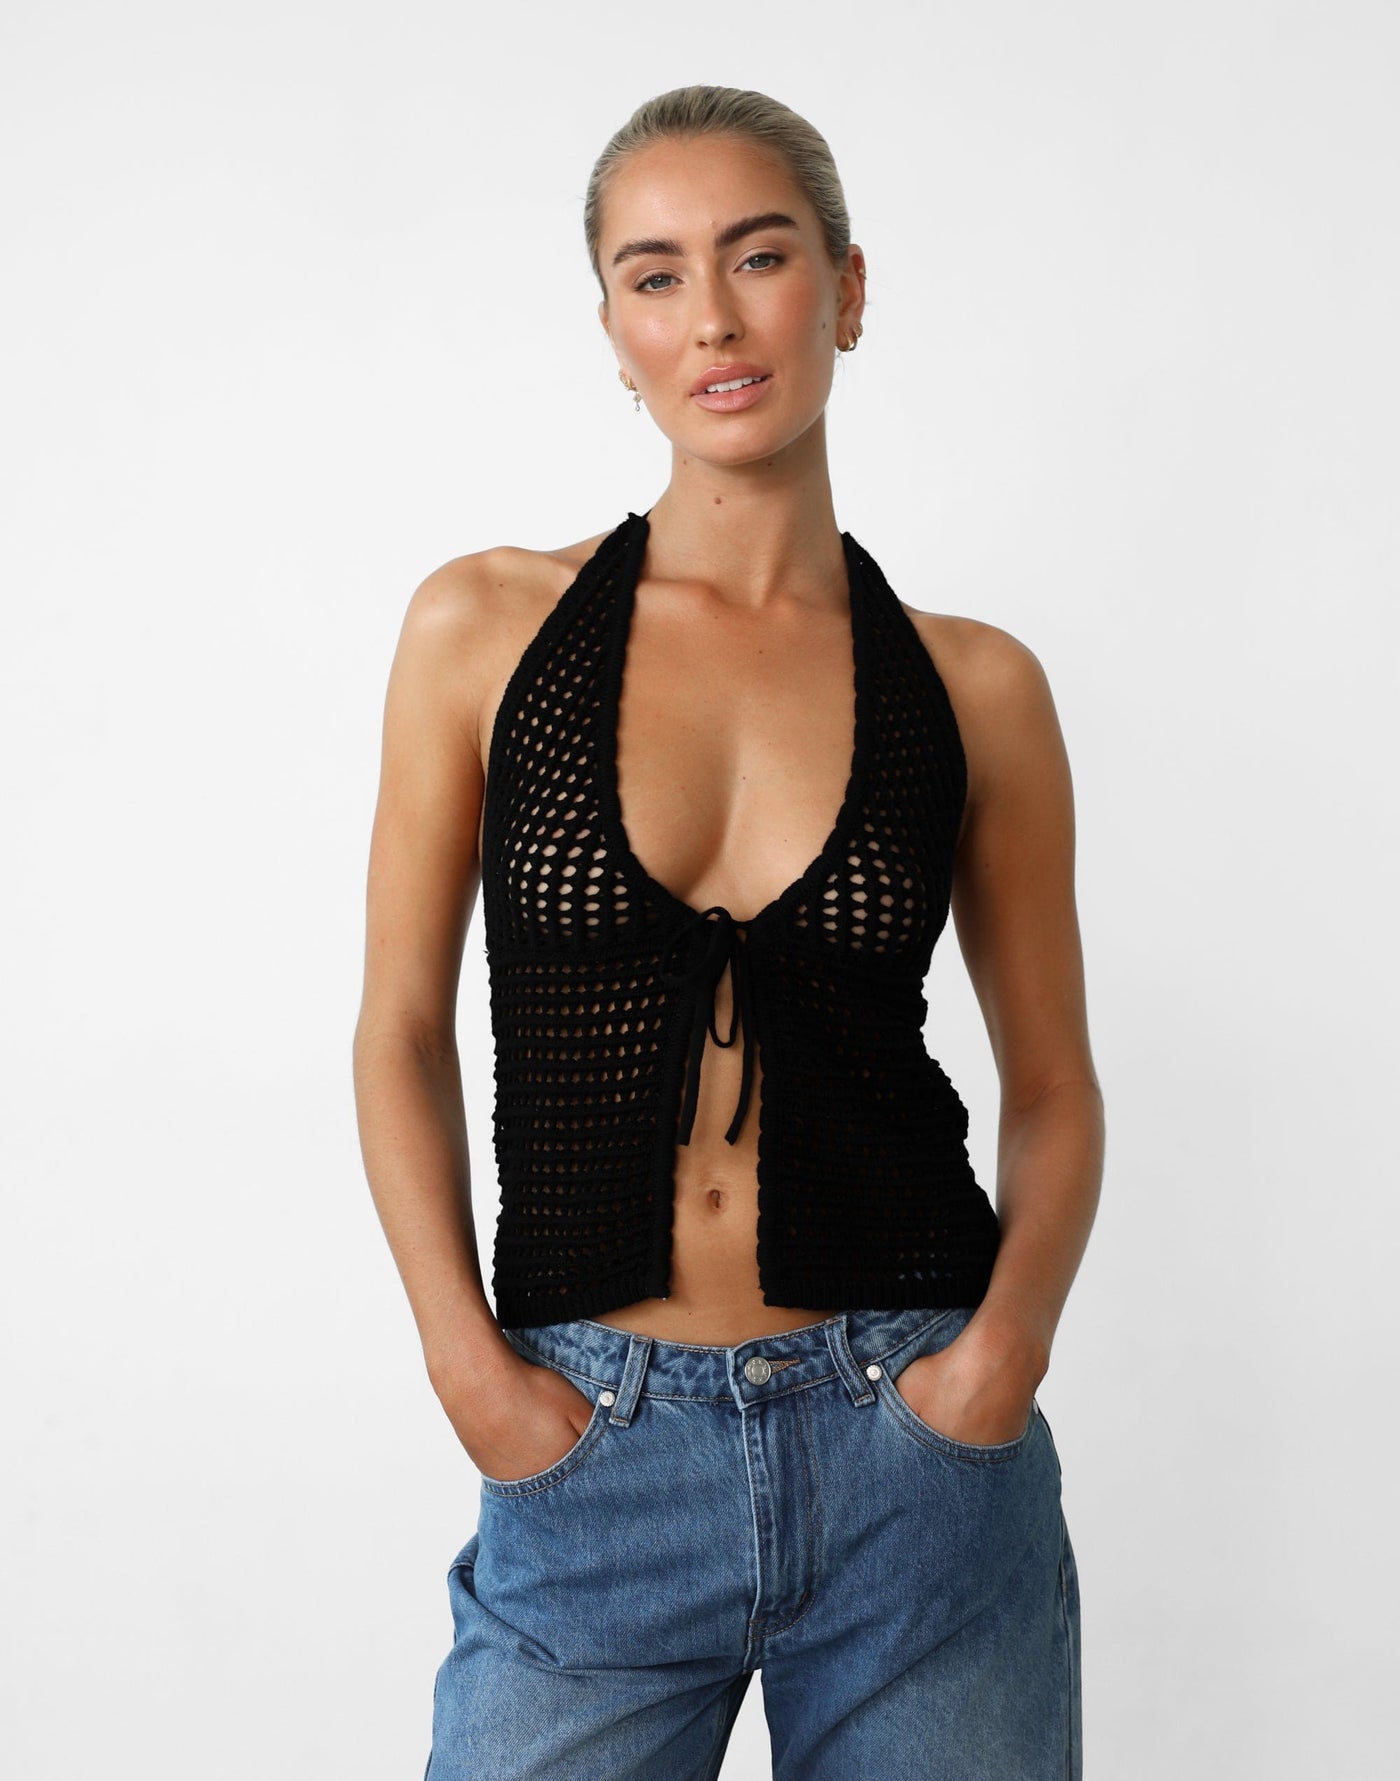 Wild Soul Crochet Top (Black) - V-neck Tie-up Top - Women's Top - Charcoal Clothing